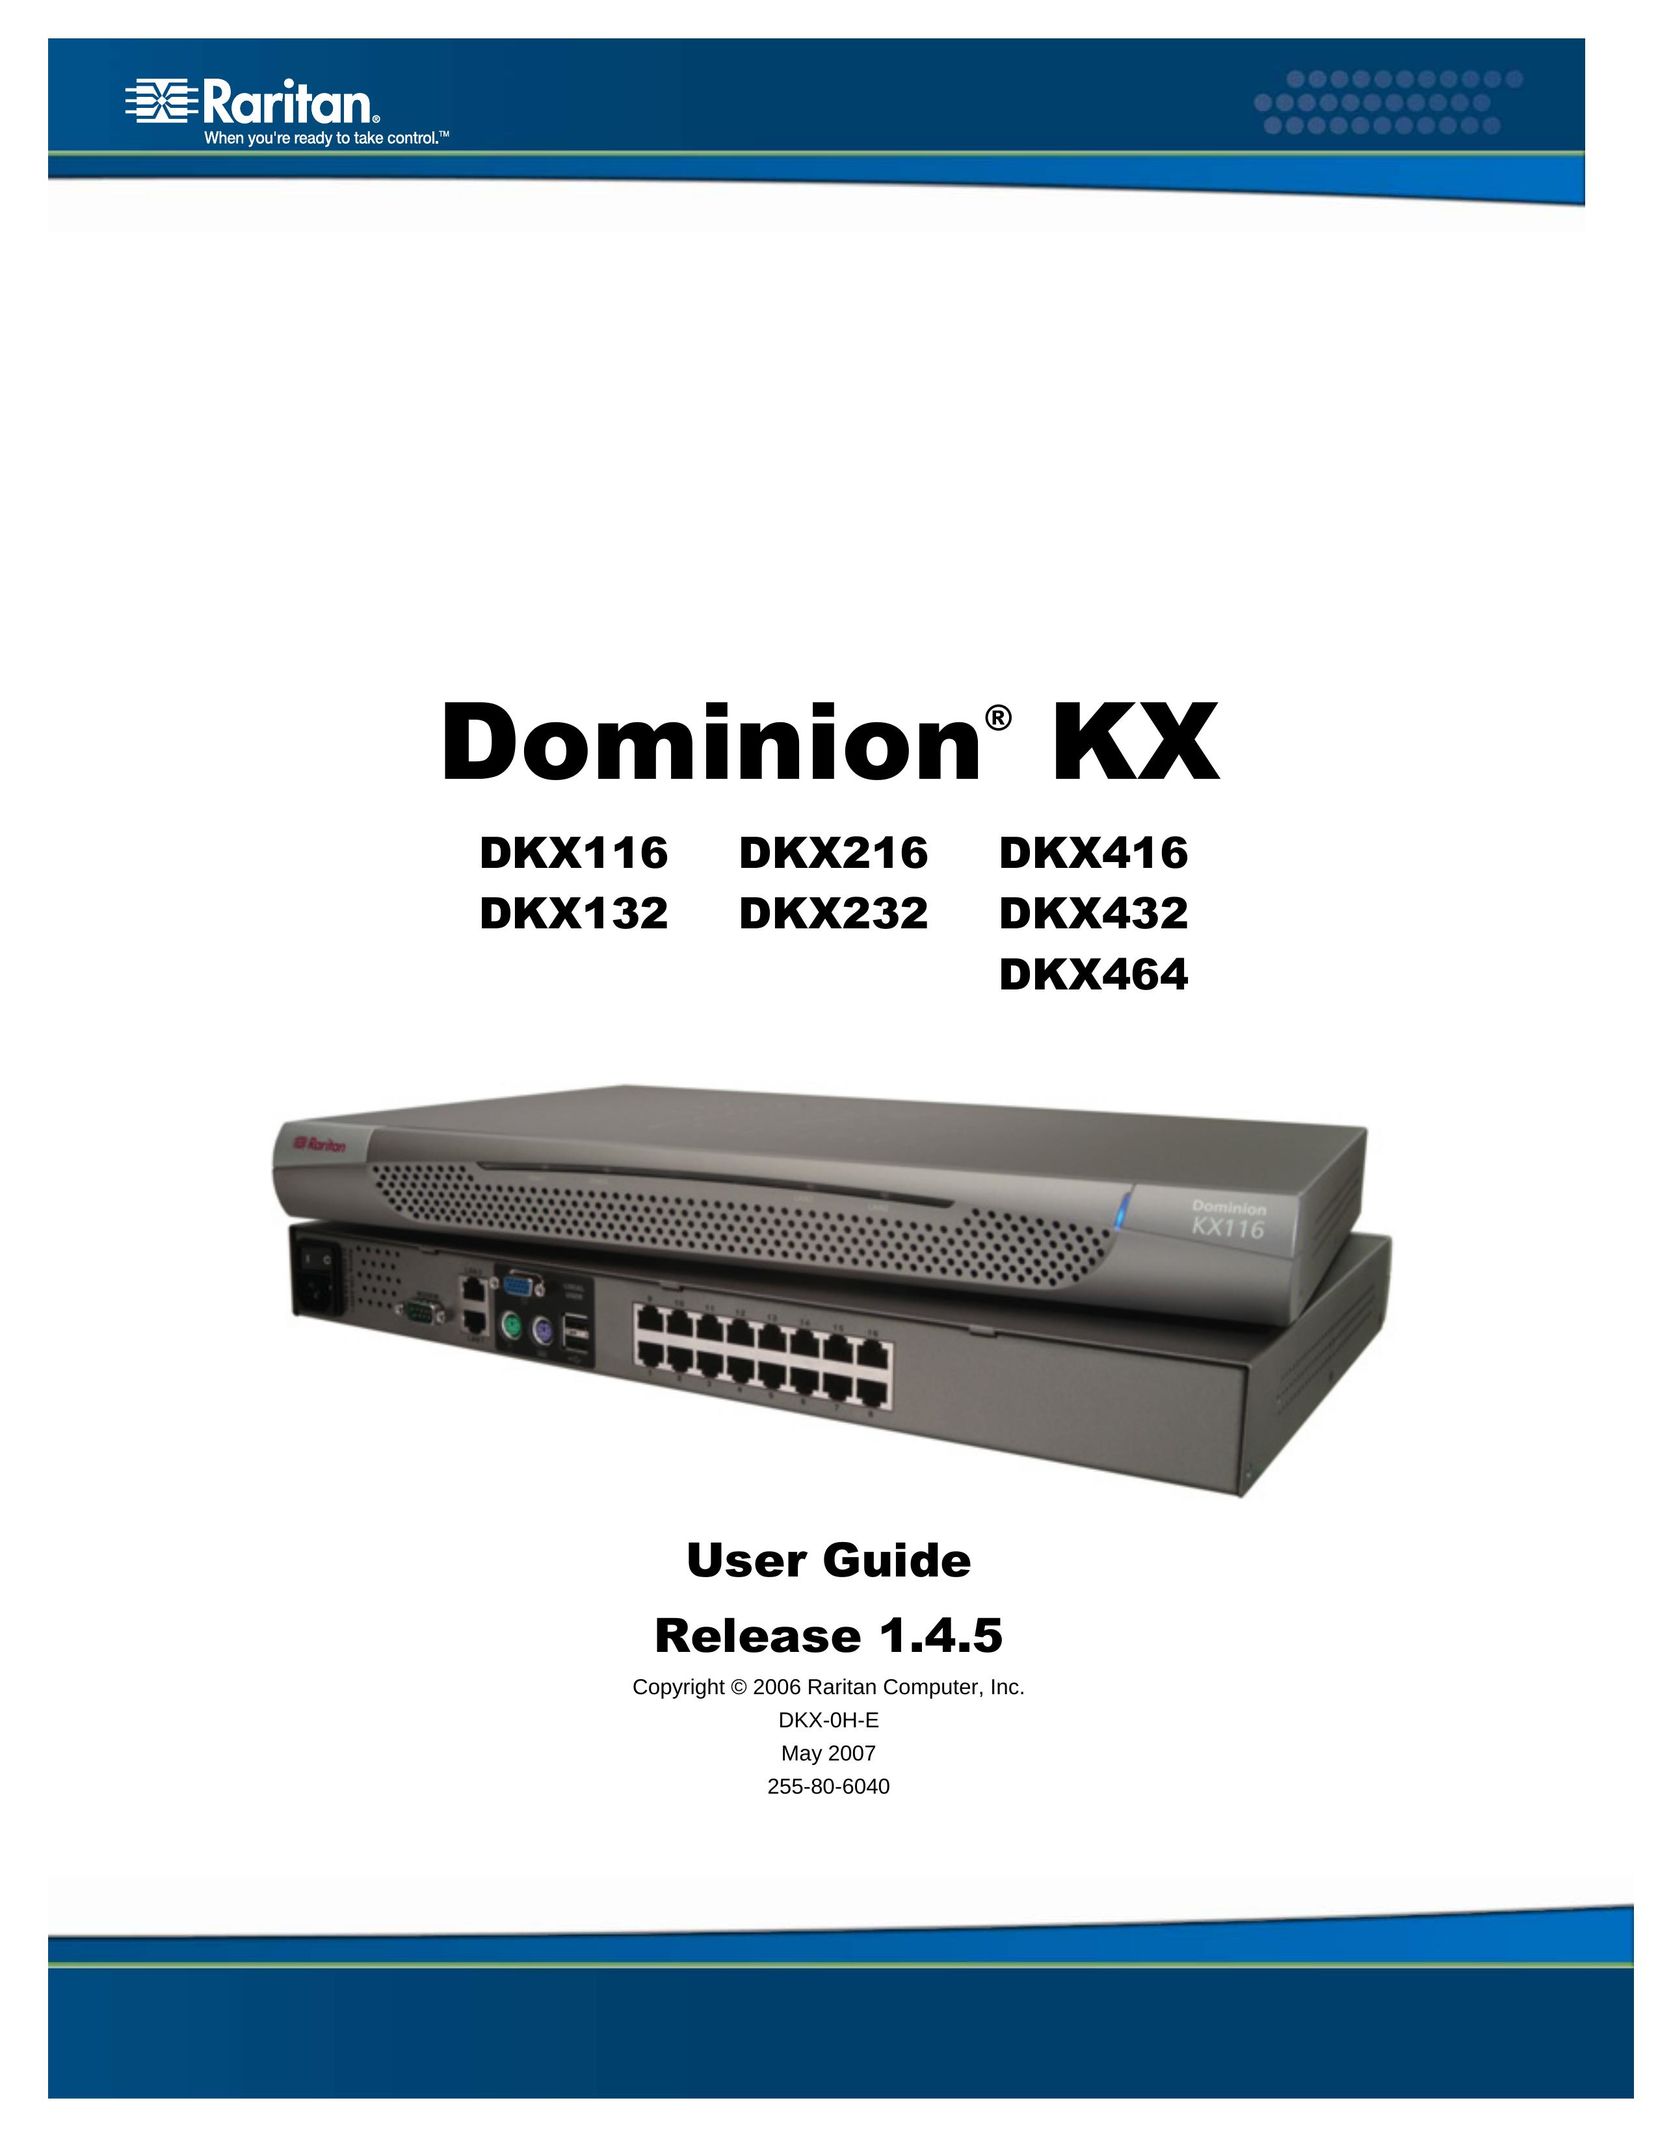 Raritan Computer DKX232 Network Router User Manual